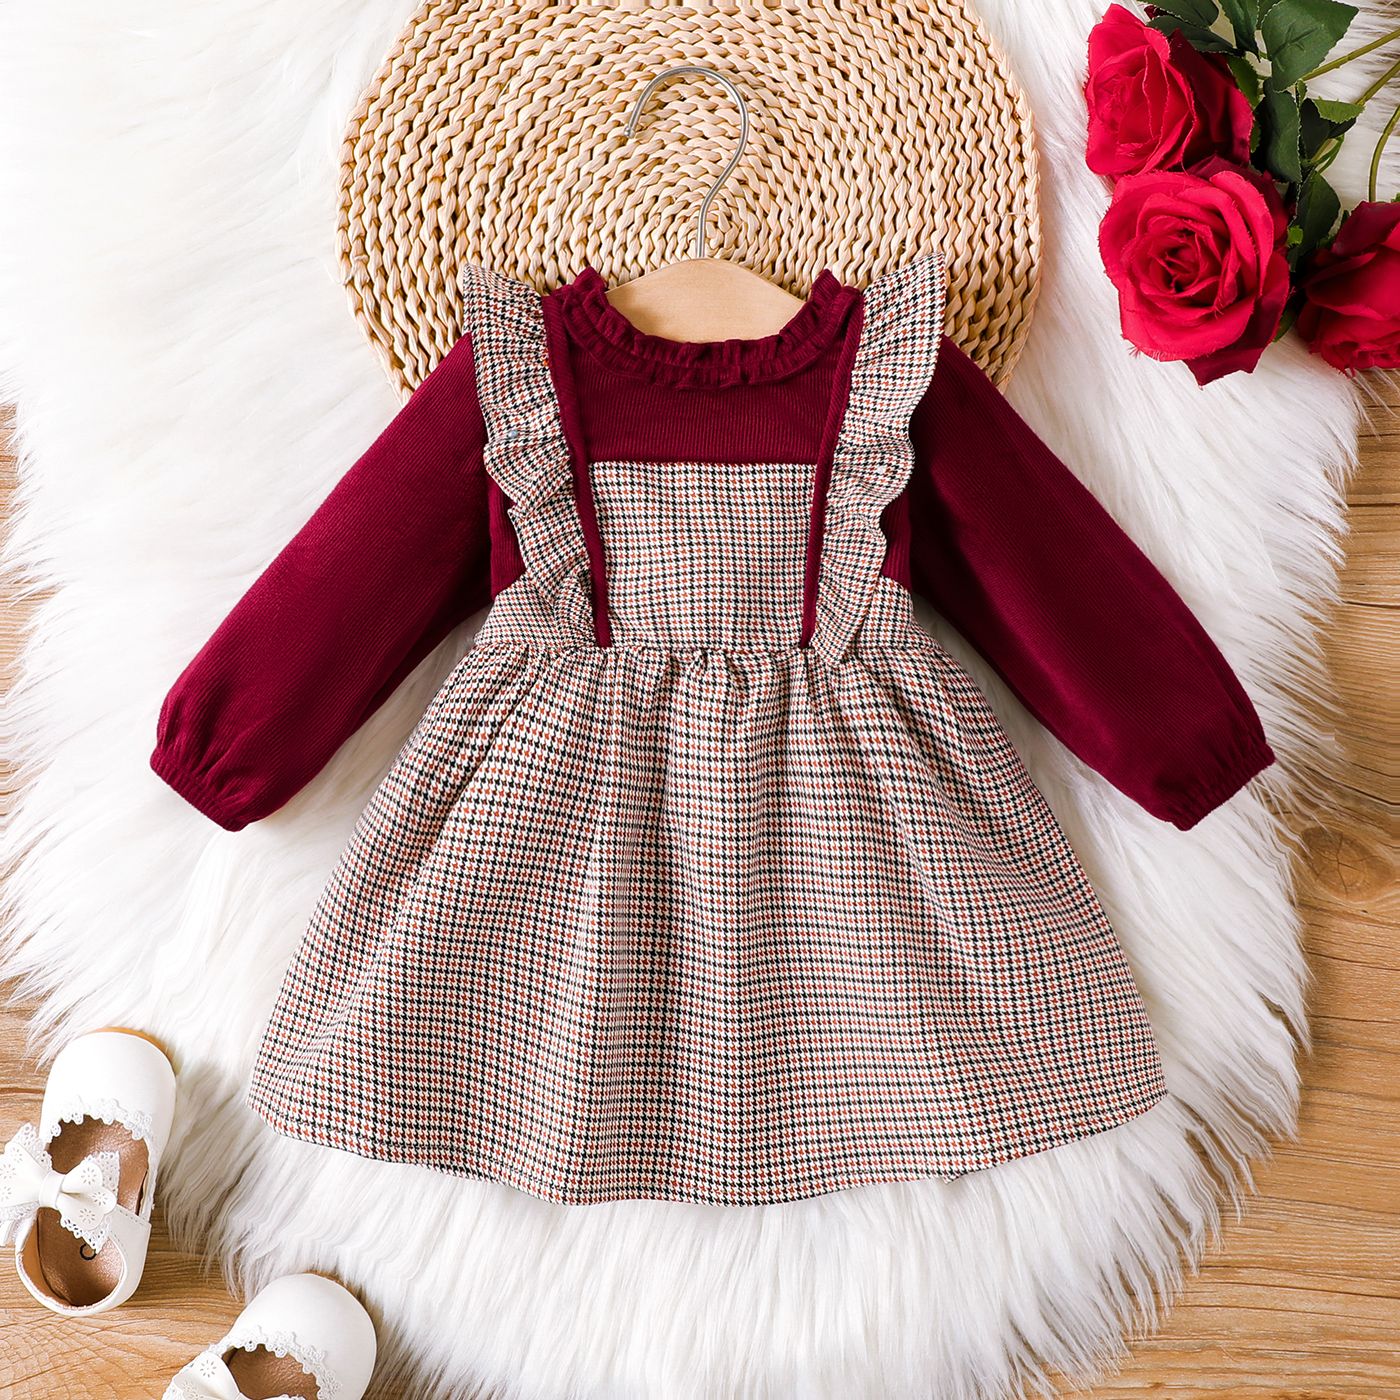 DORCHIS Baby Girl Dress 2-3 Years - Woolen Frock, Peach-Orange, Handmade |  eBay